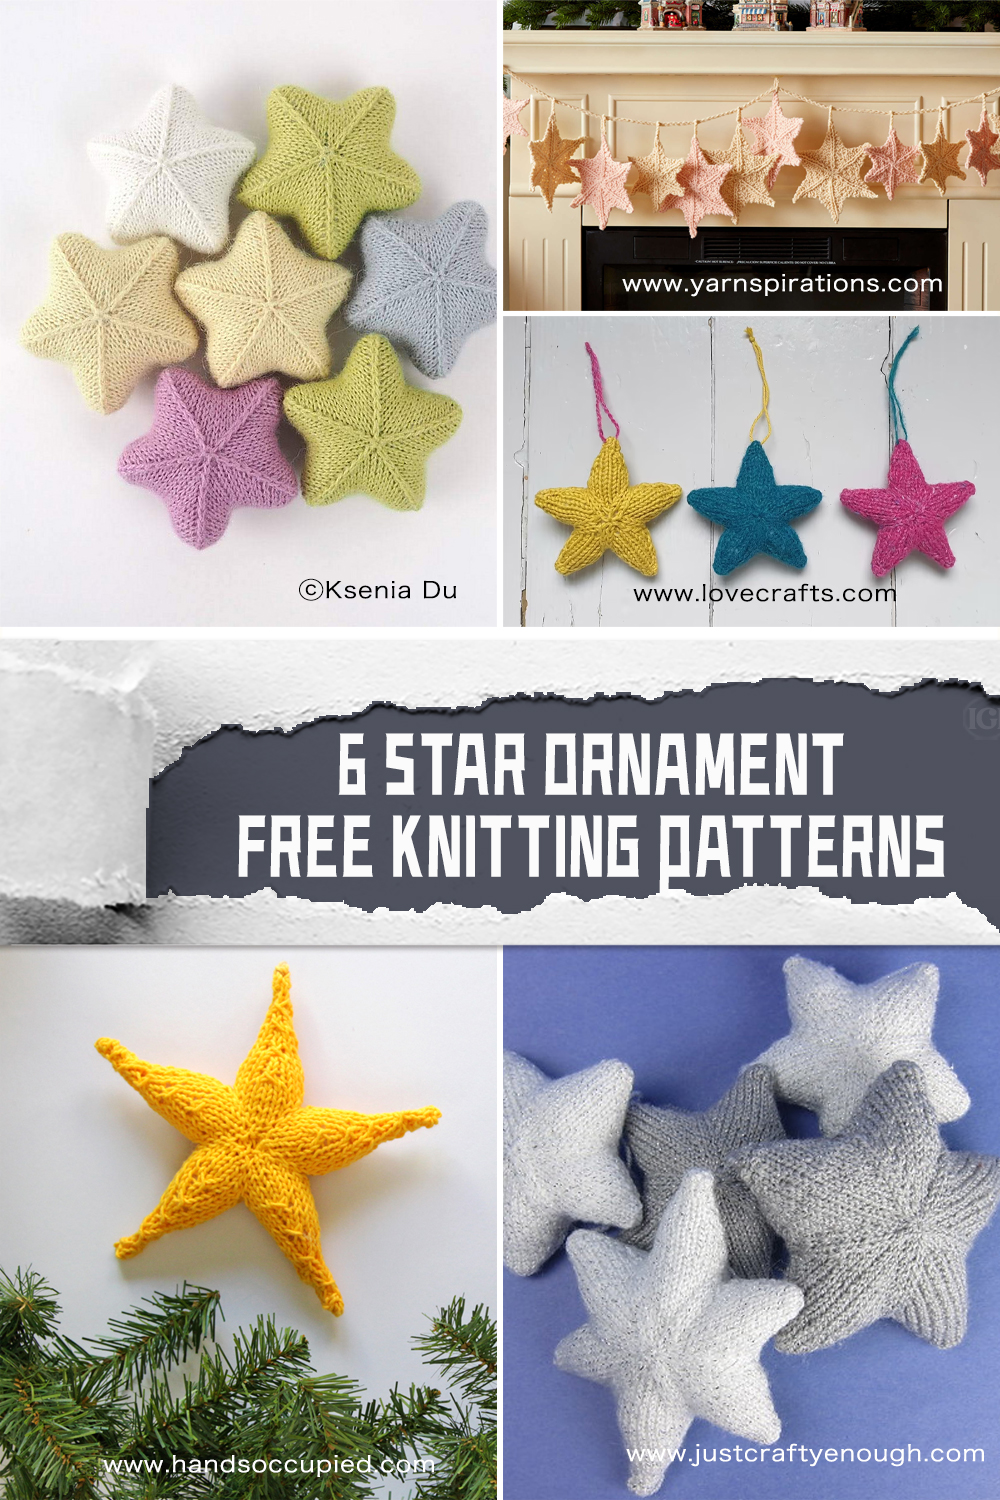 6 Ornament Star FREE Knitting Patterns